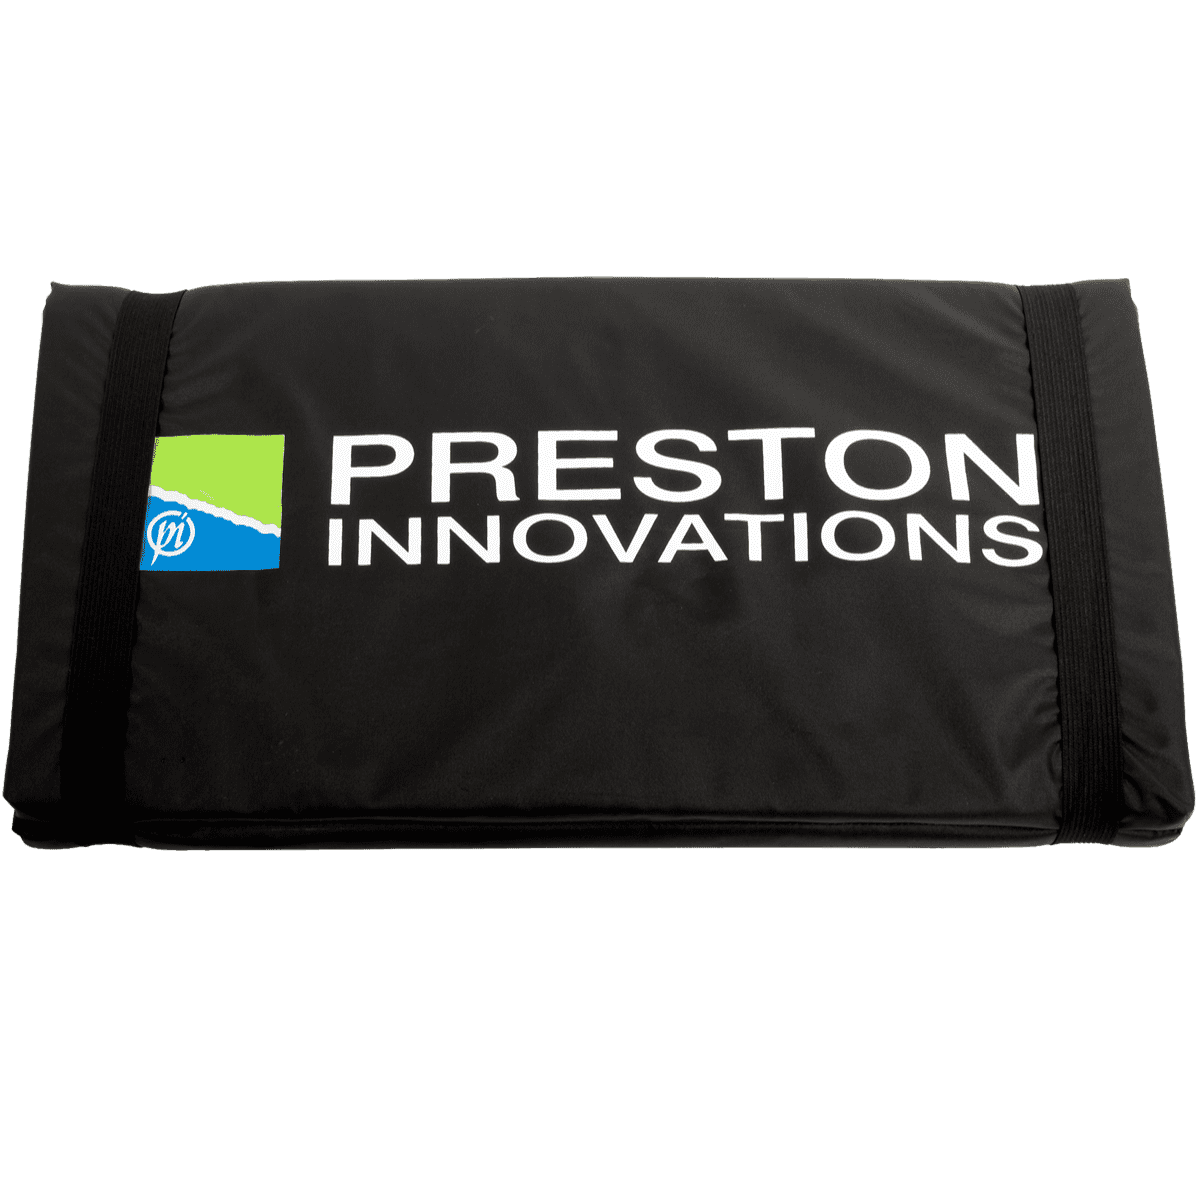 Preston fold away unhooking mat